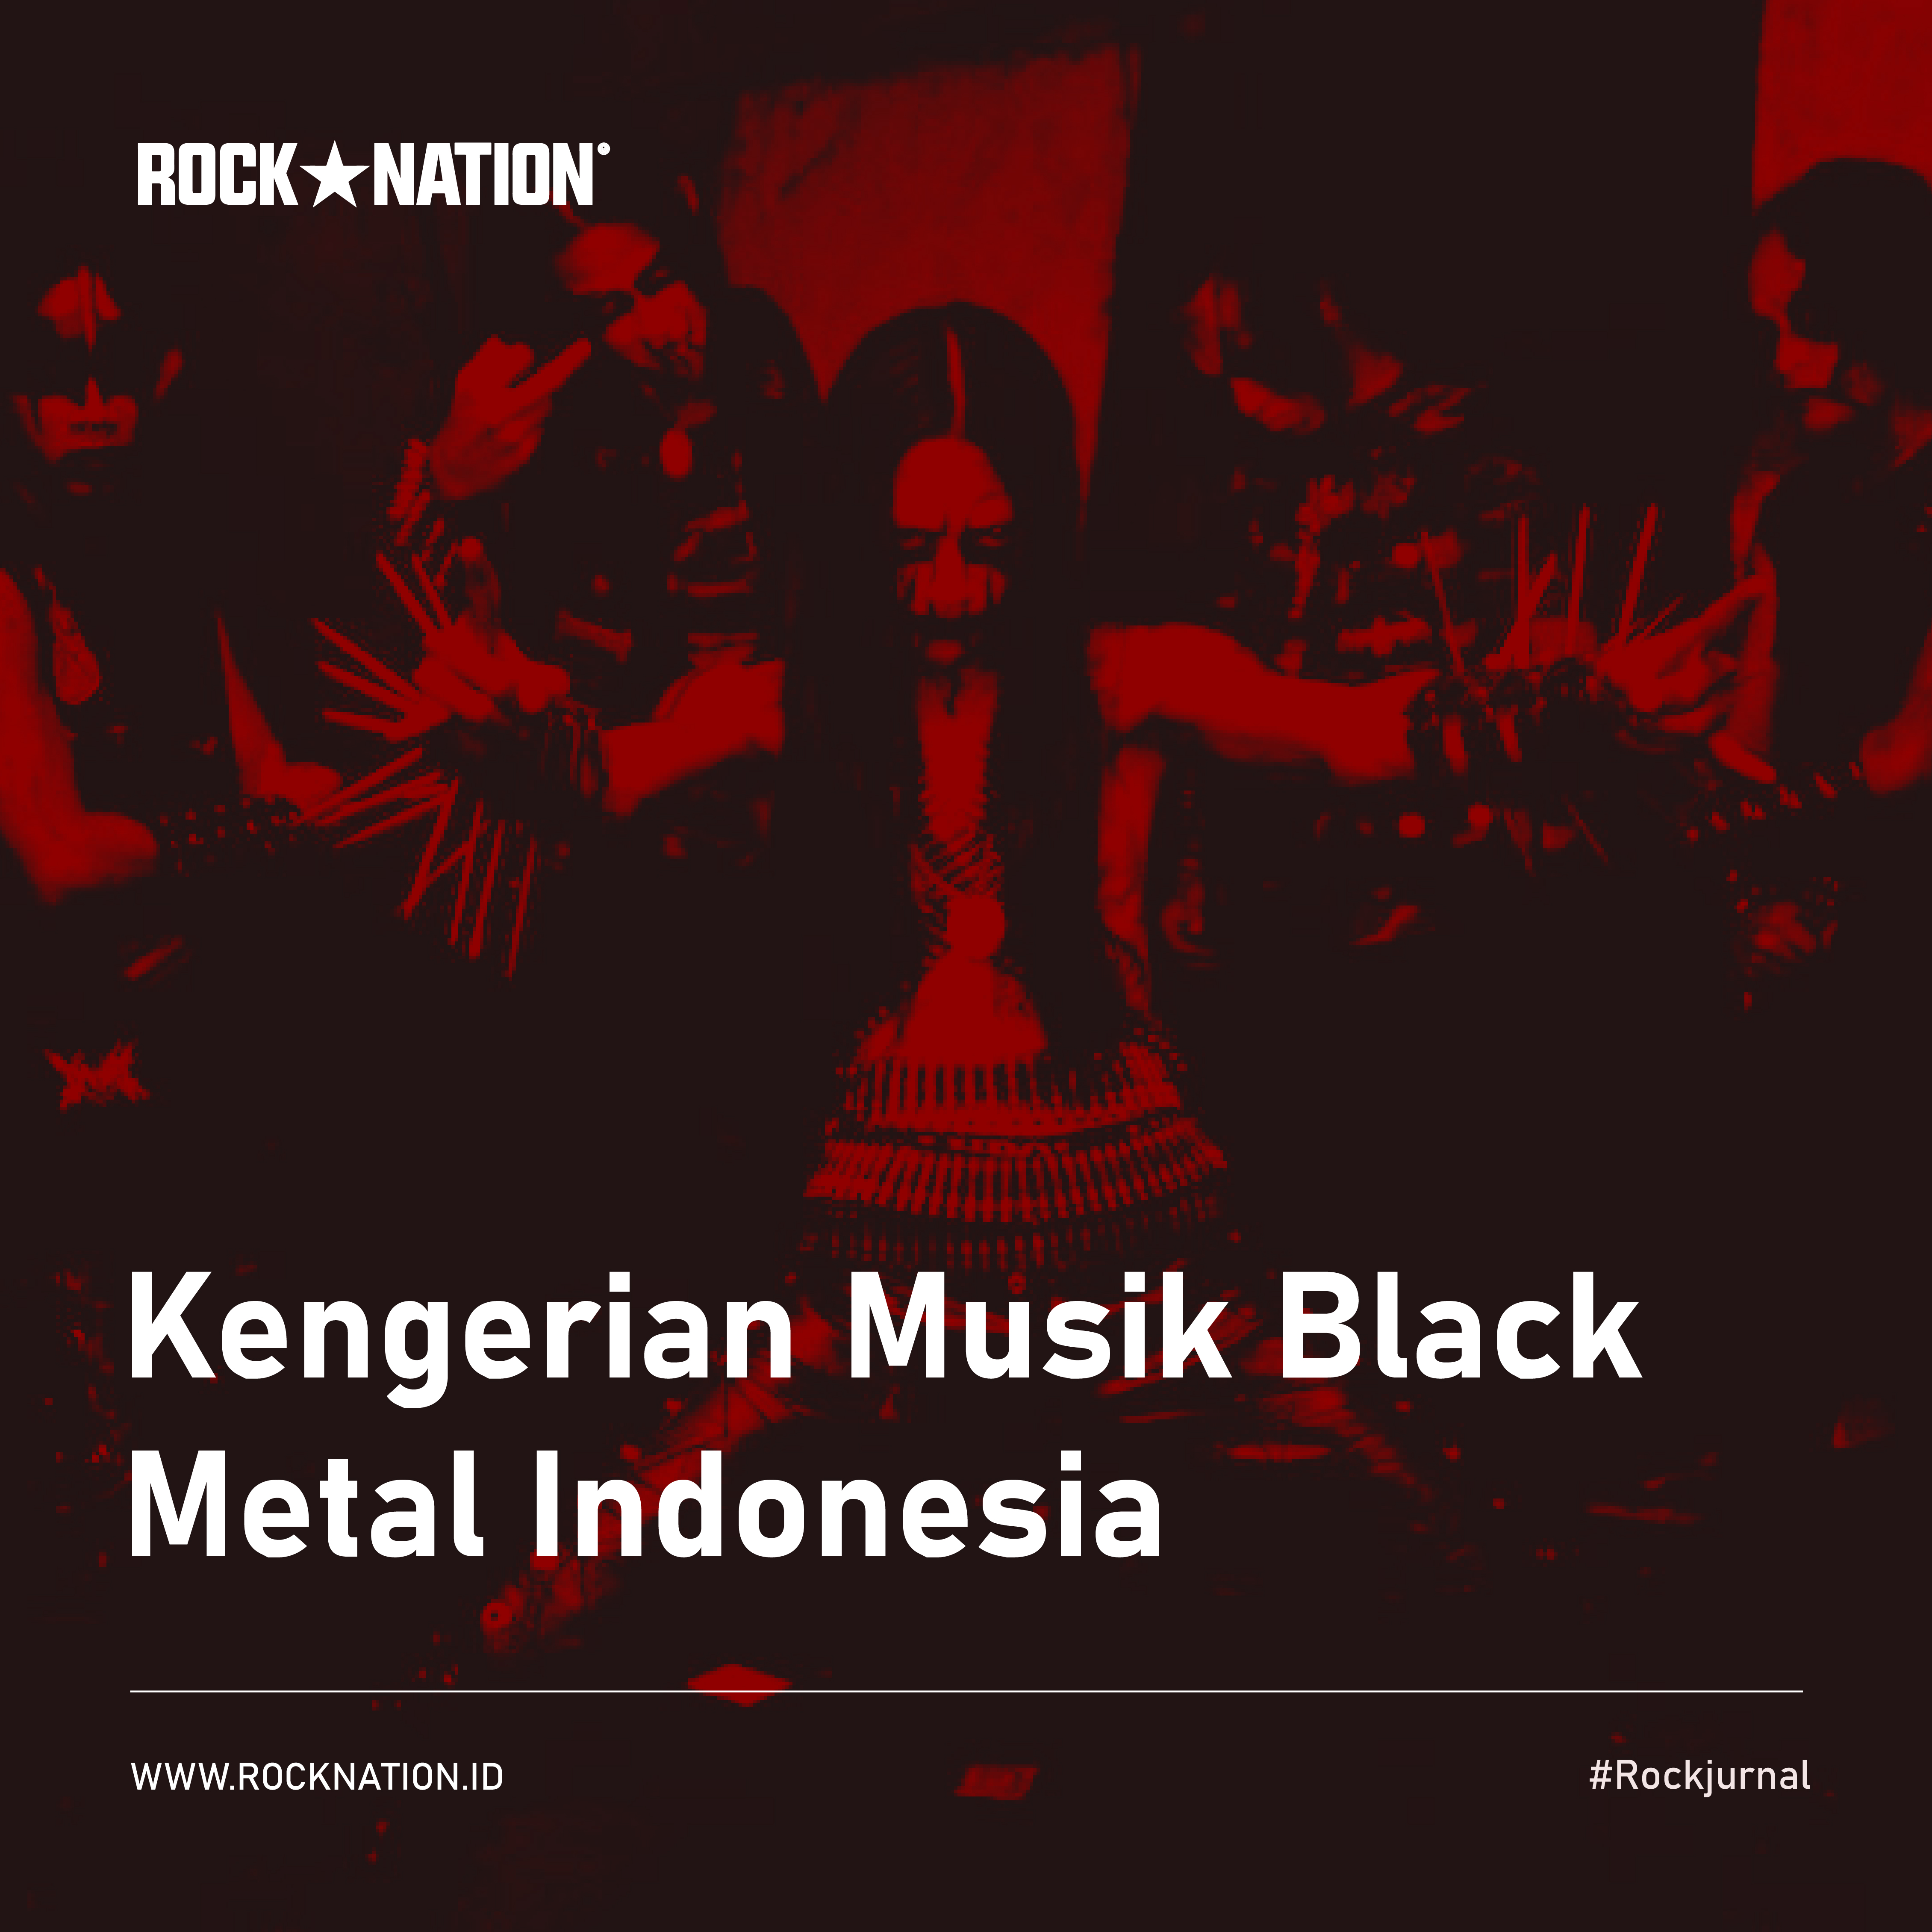 Kengerian Musik Black Metal Indonesia image